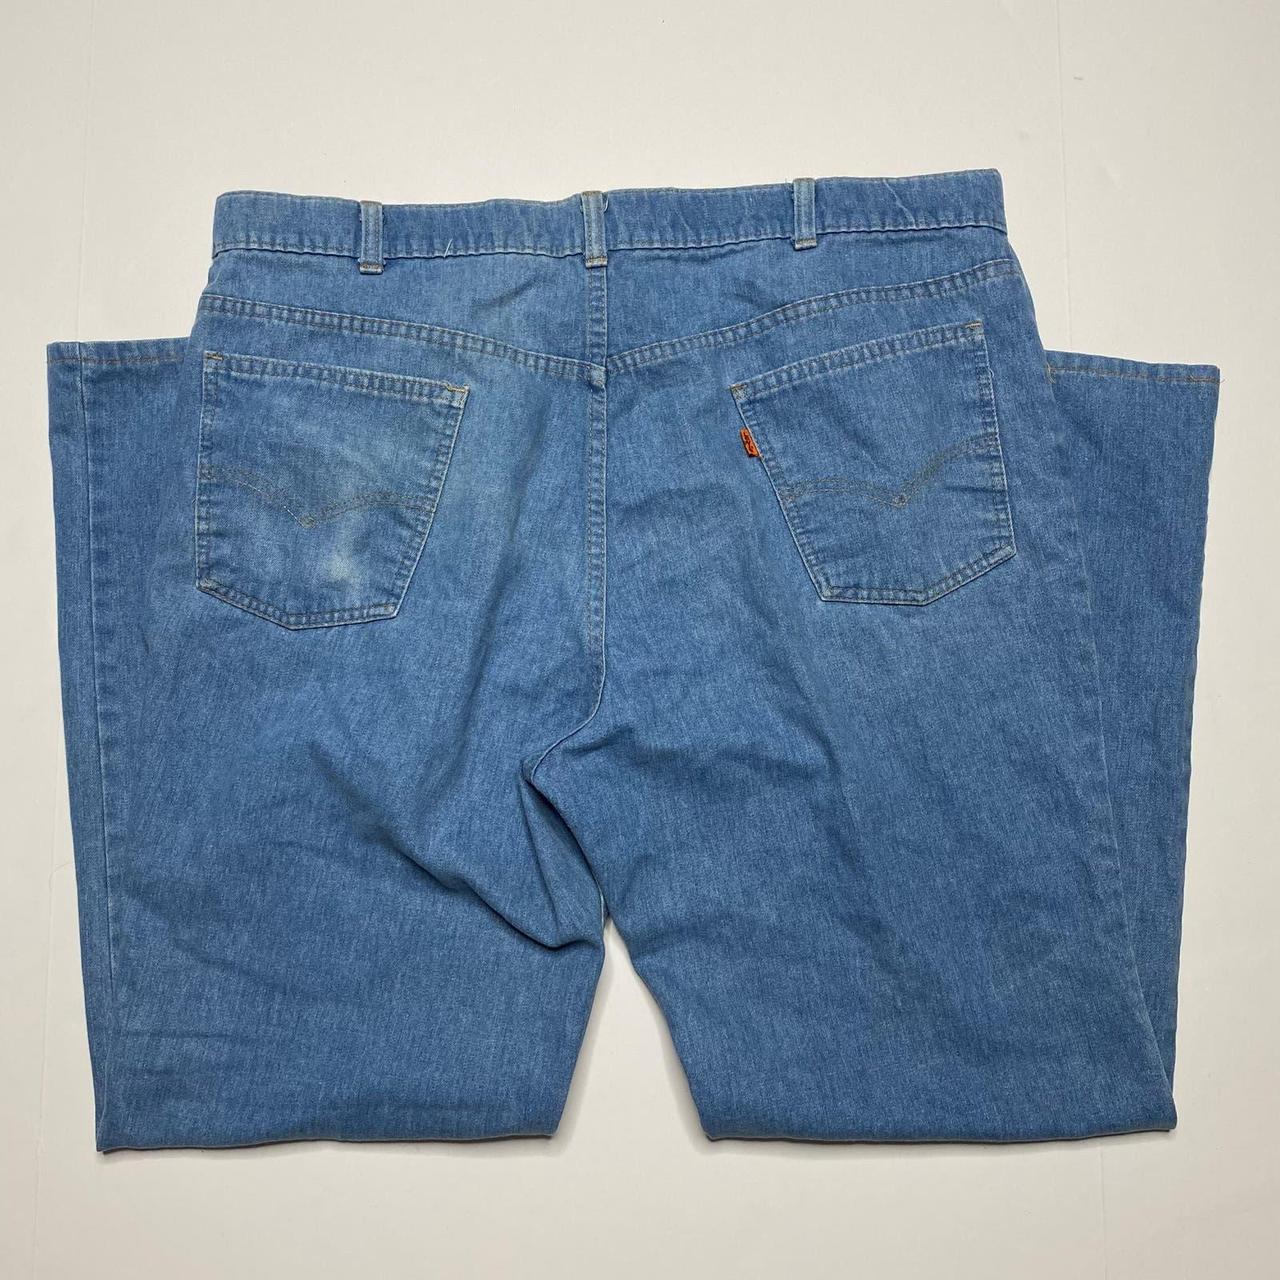 1987 Levis 501 Preshrunk Jeans 36x32